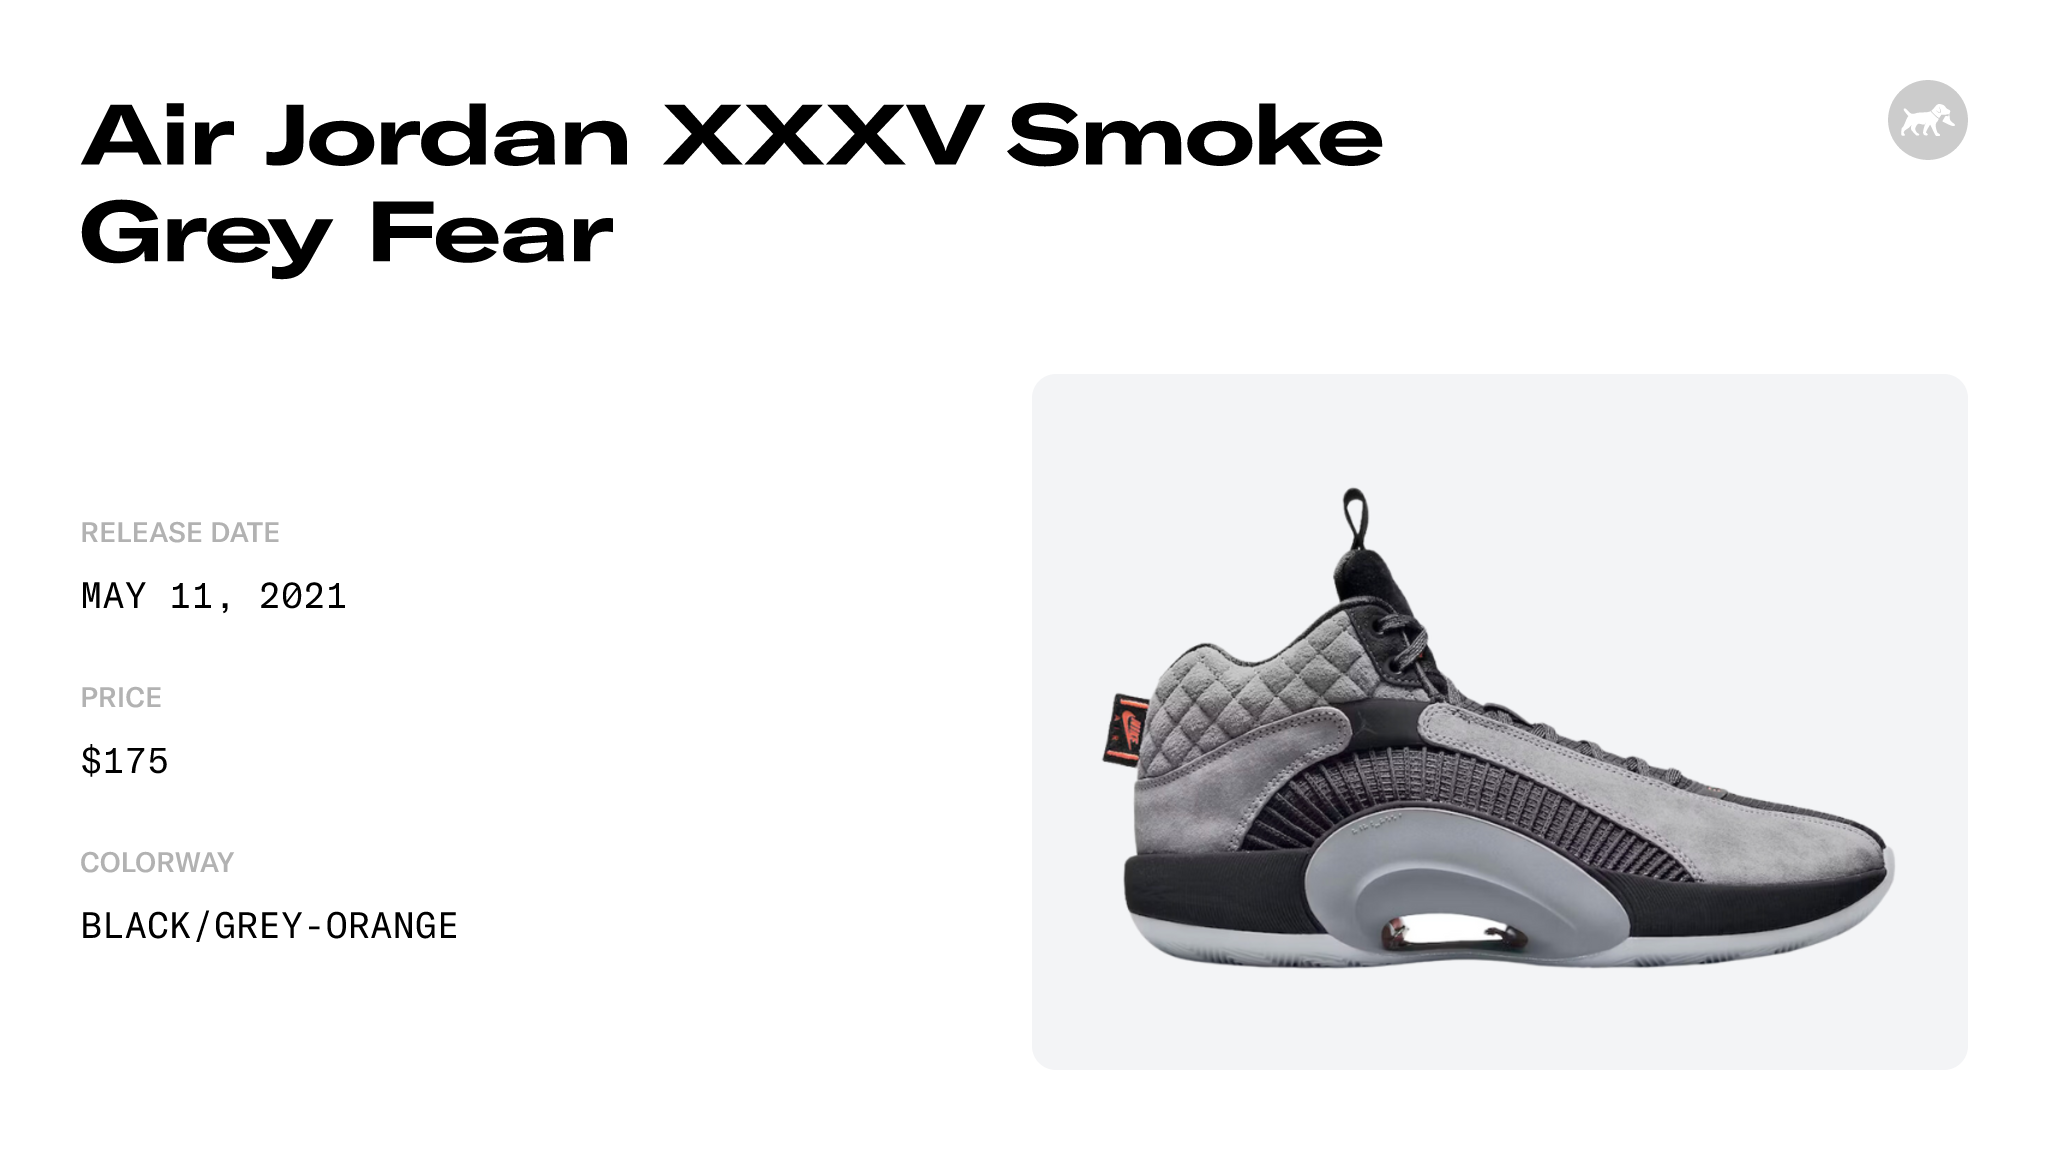 Air Jordan XXXV Smoke Grey Fear - DJ6166-006 Raffles and Release Date